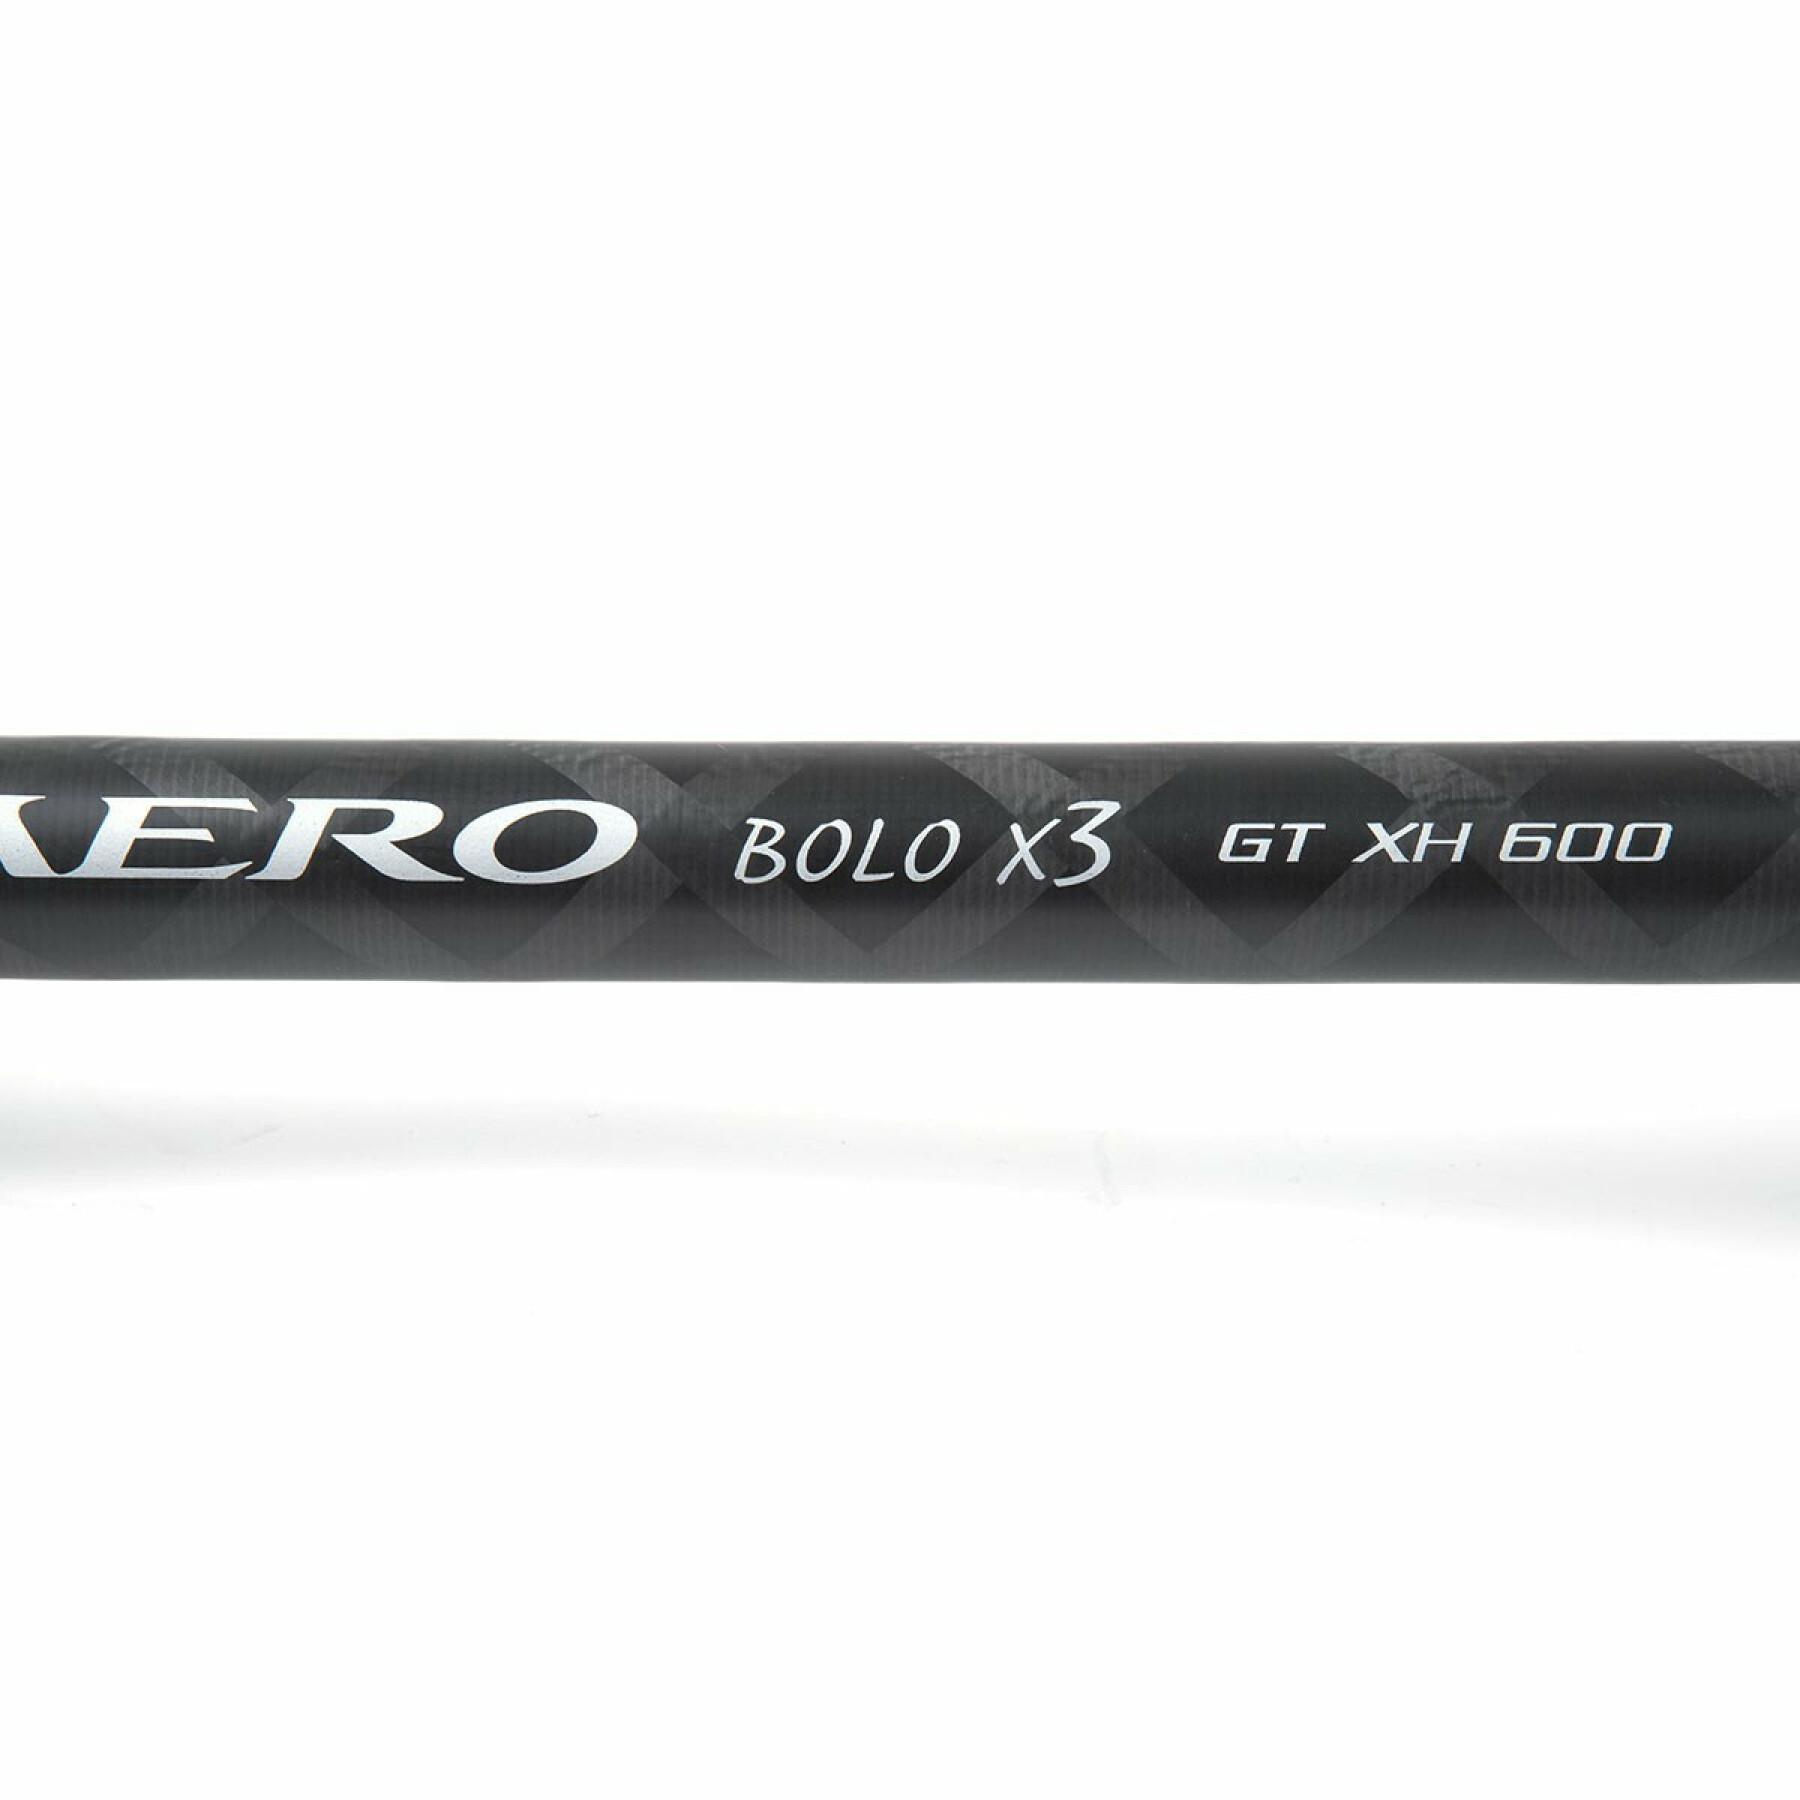 Teleskopischer Gehstock Shimano Rod Aero X5 Bolo GT 25g